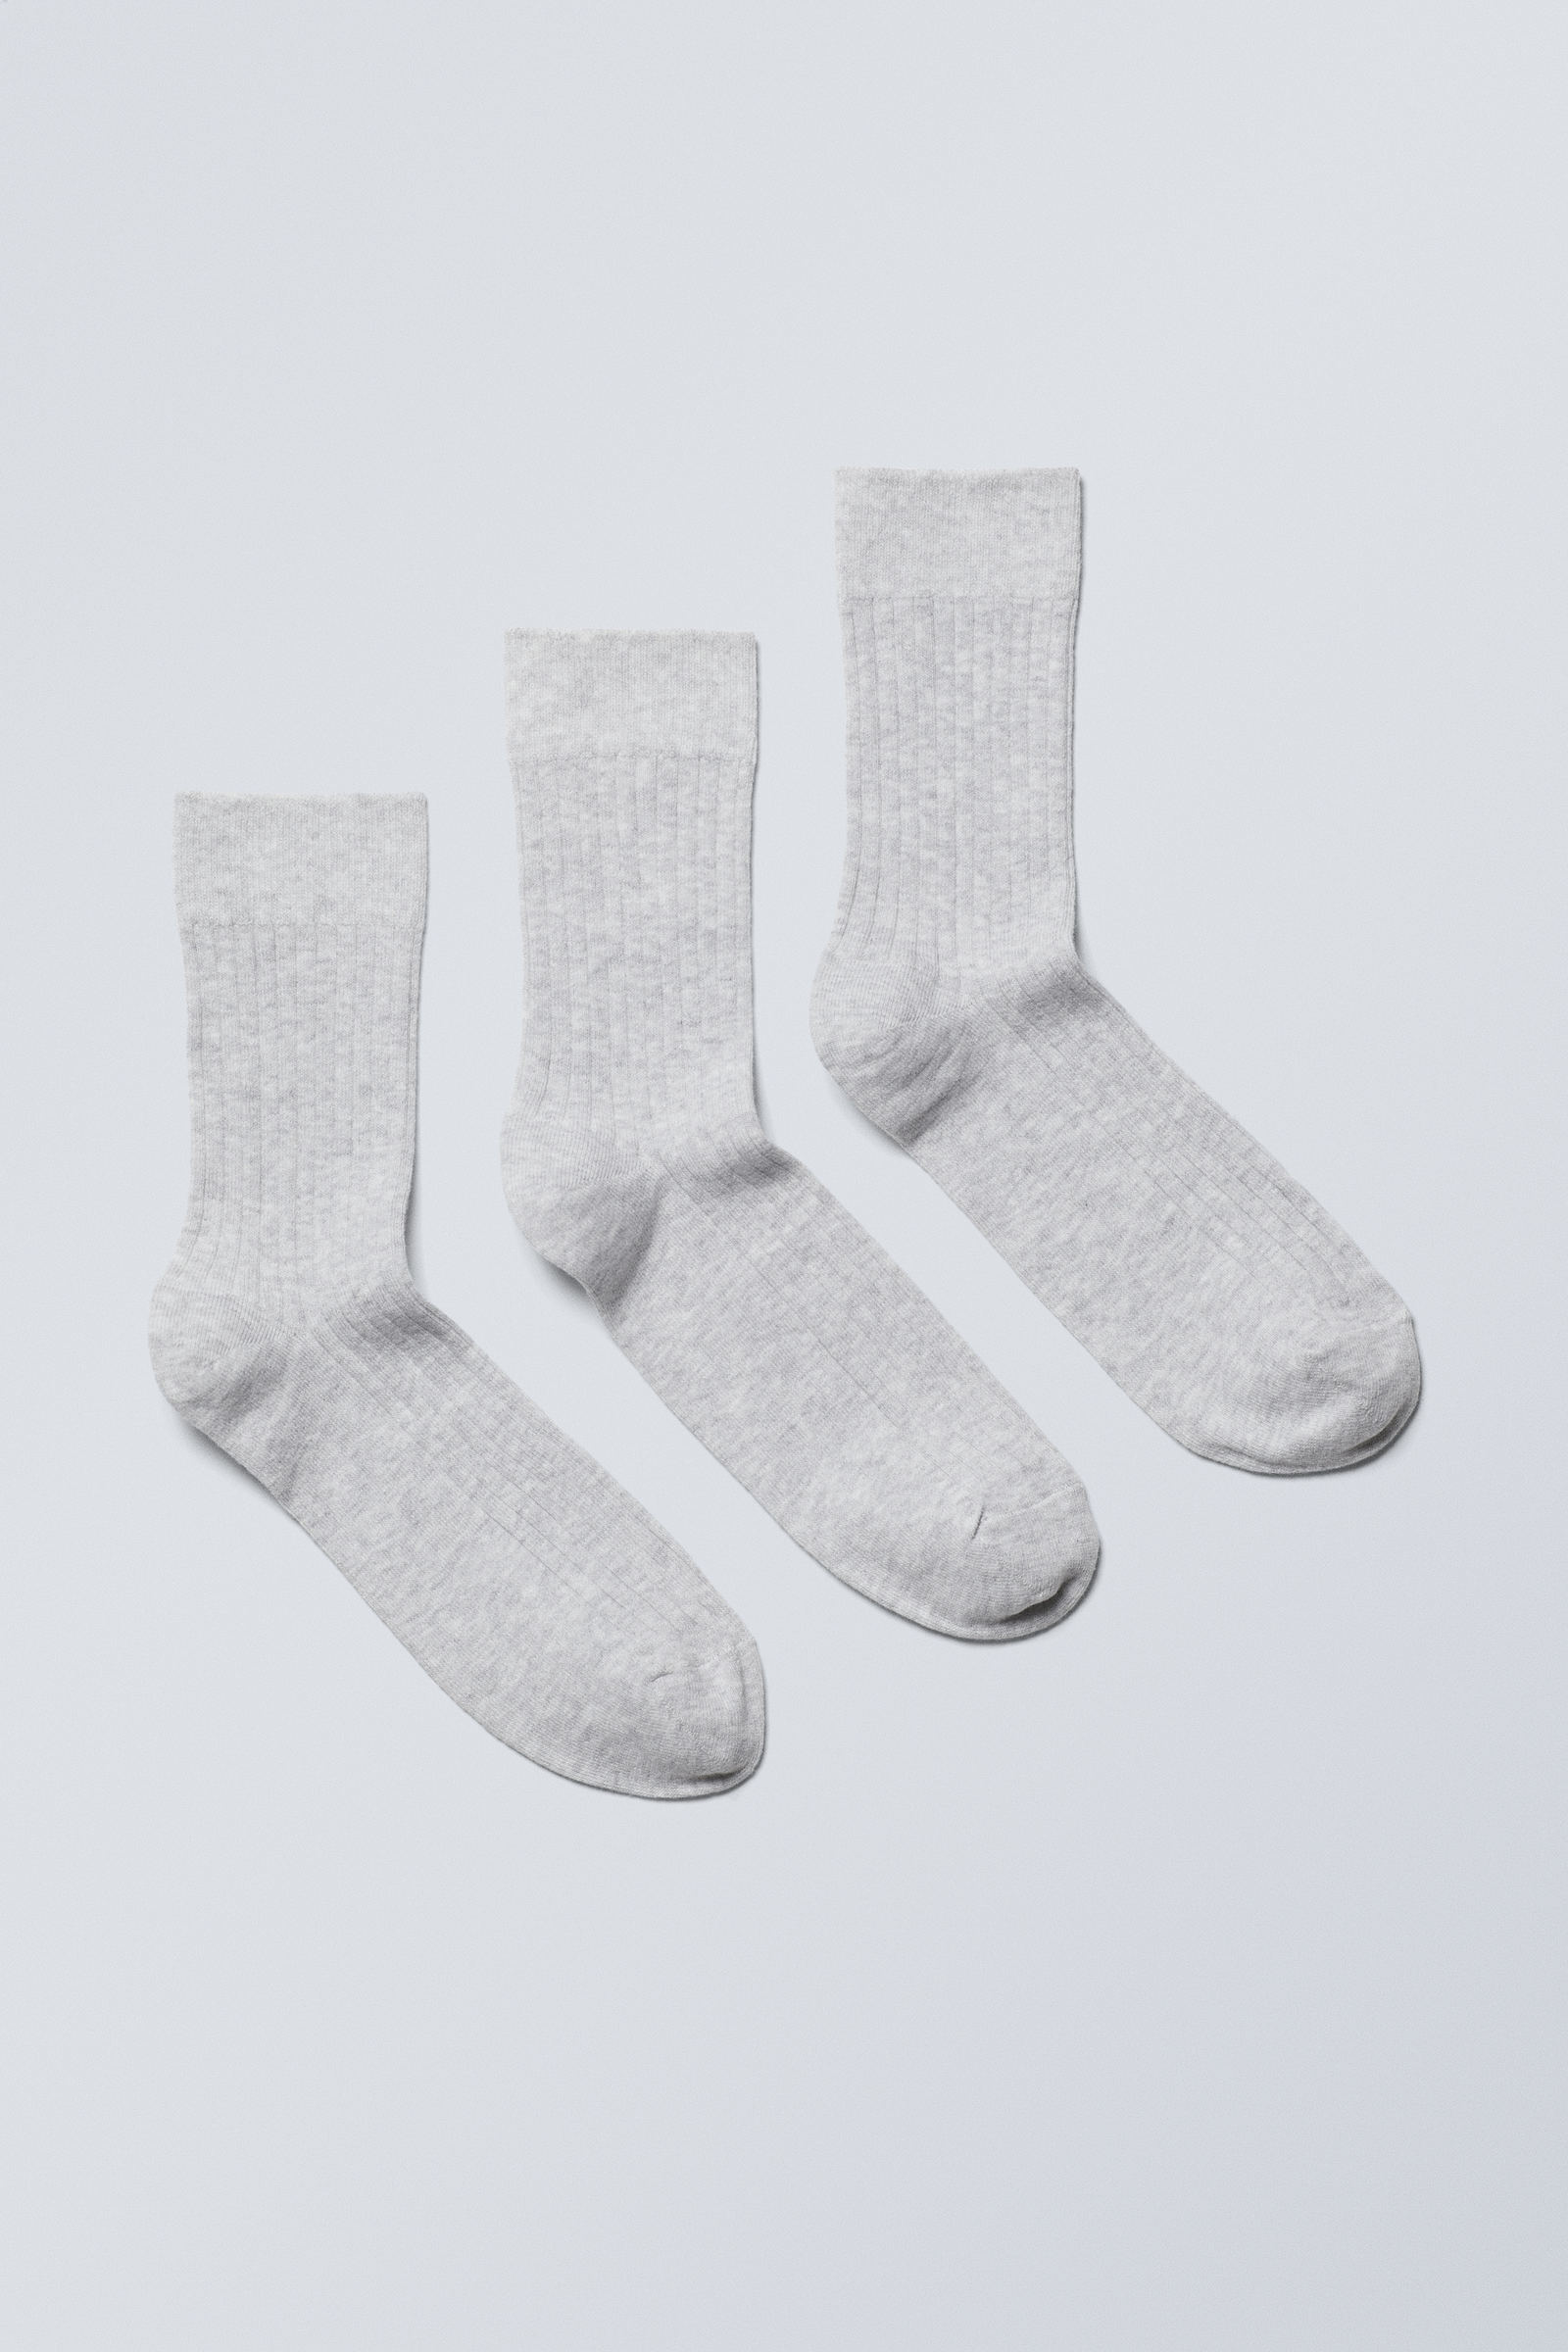 Women's Socks - Shop Accessories Online